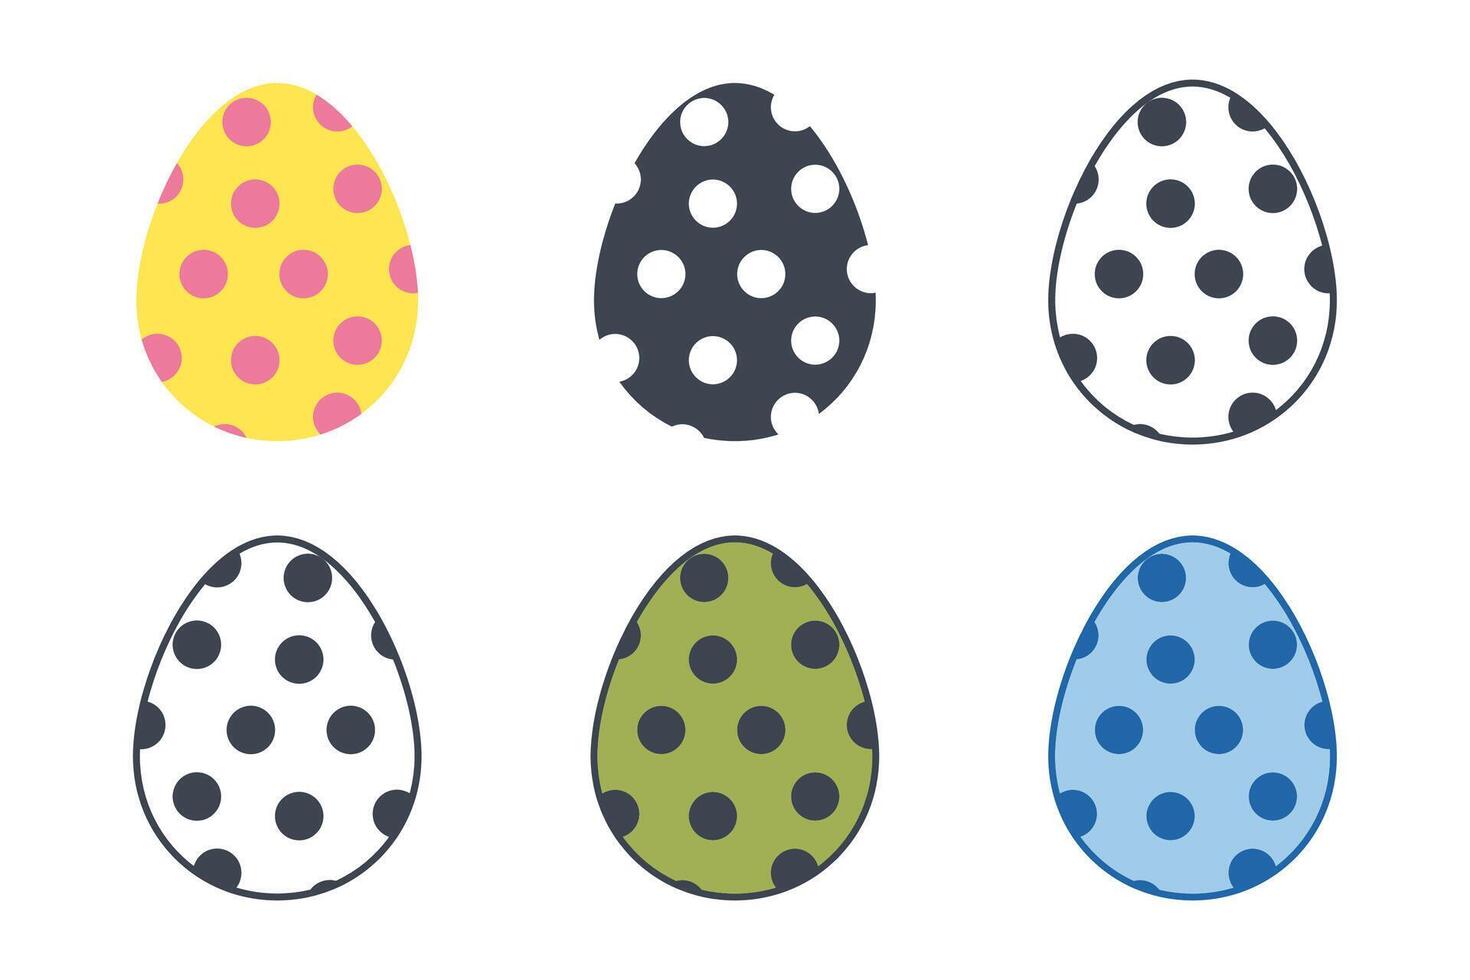 Pascua de Resurrección día festival. Pascua de Resurrección huevos íconos en blanco antecedentes. vector ilustración